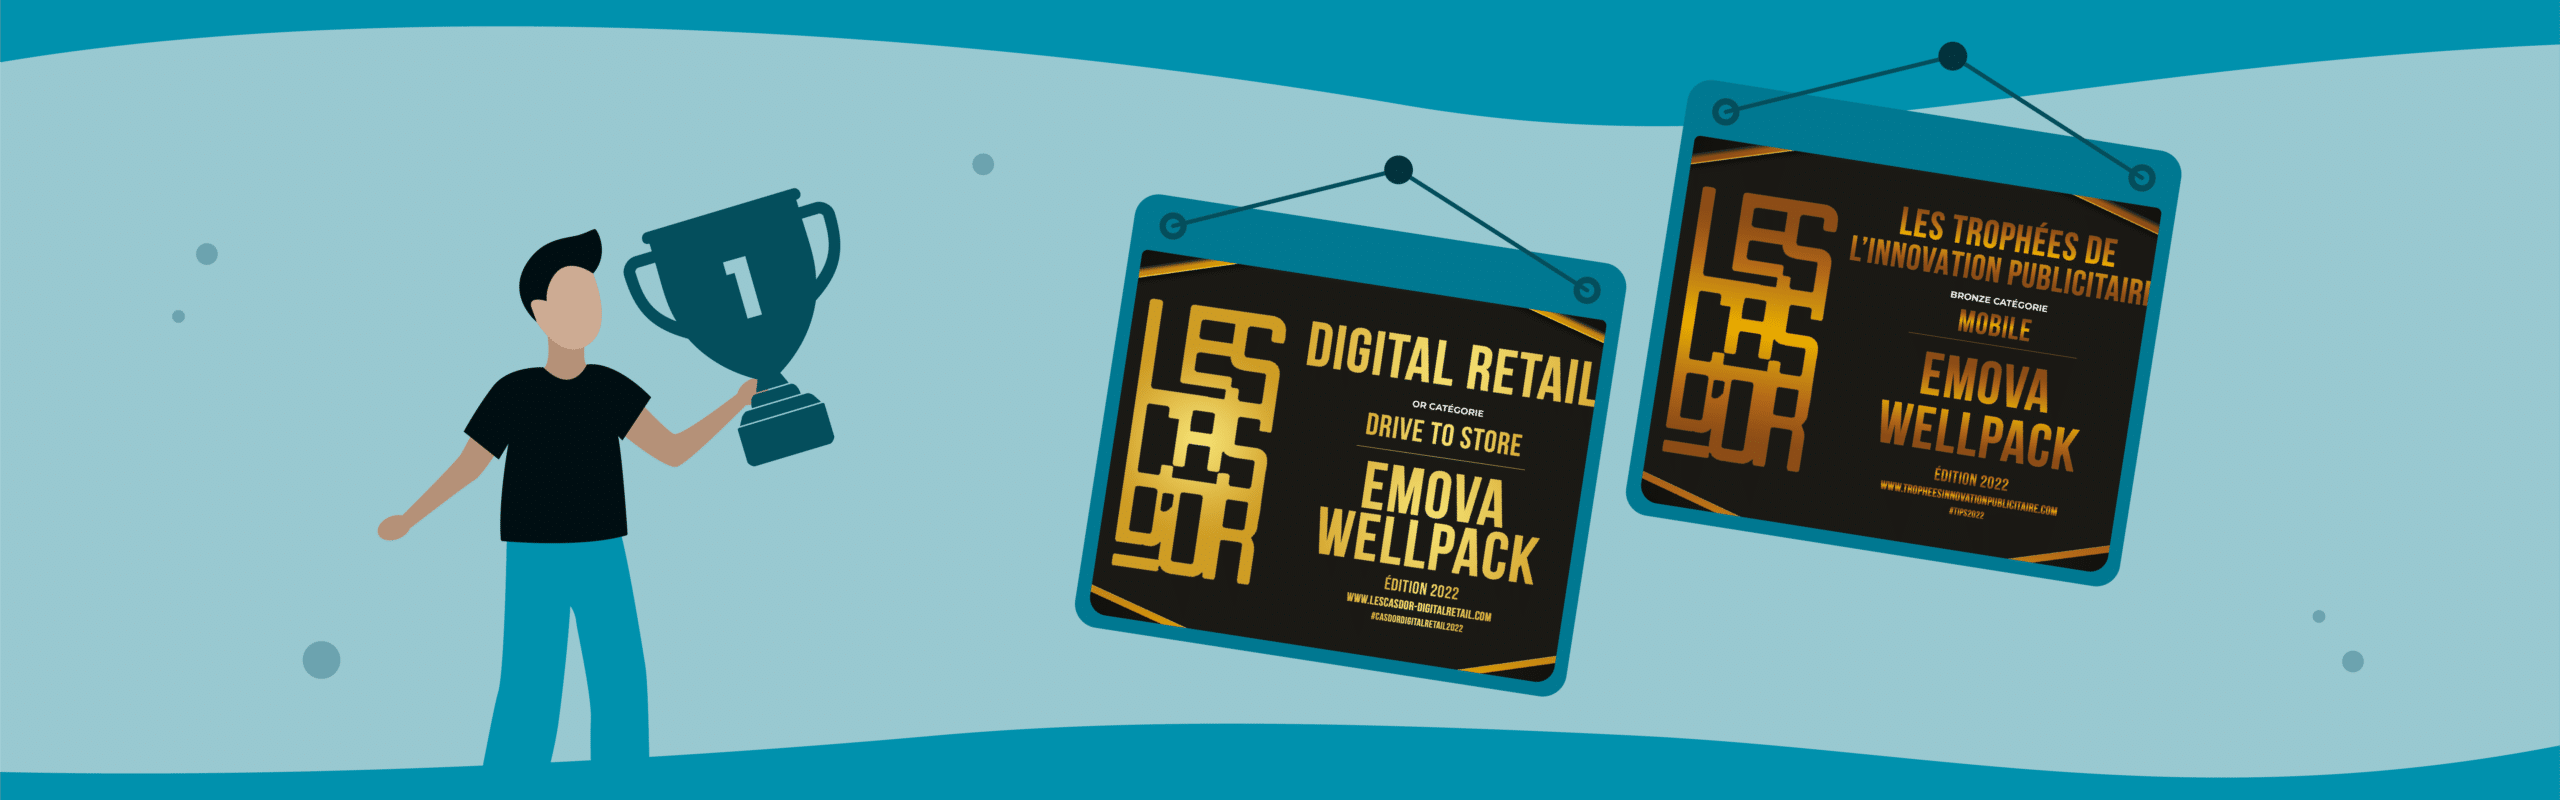 Pictogramme prix Emova x Wellpack aux digital retail